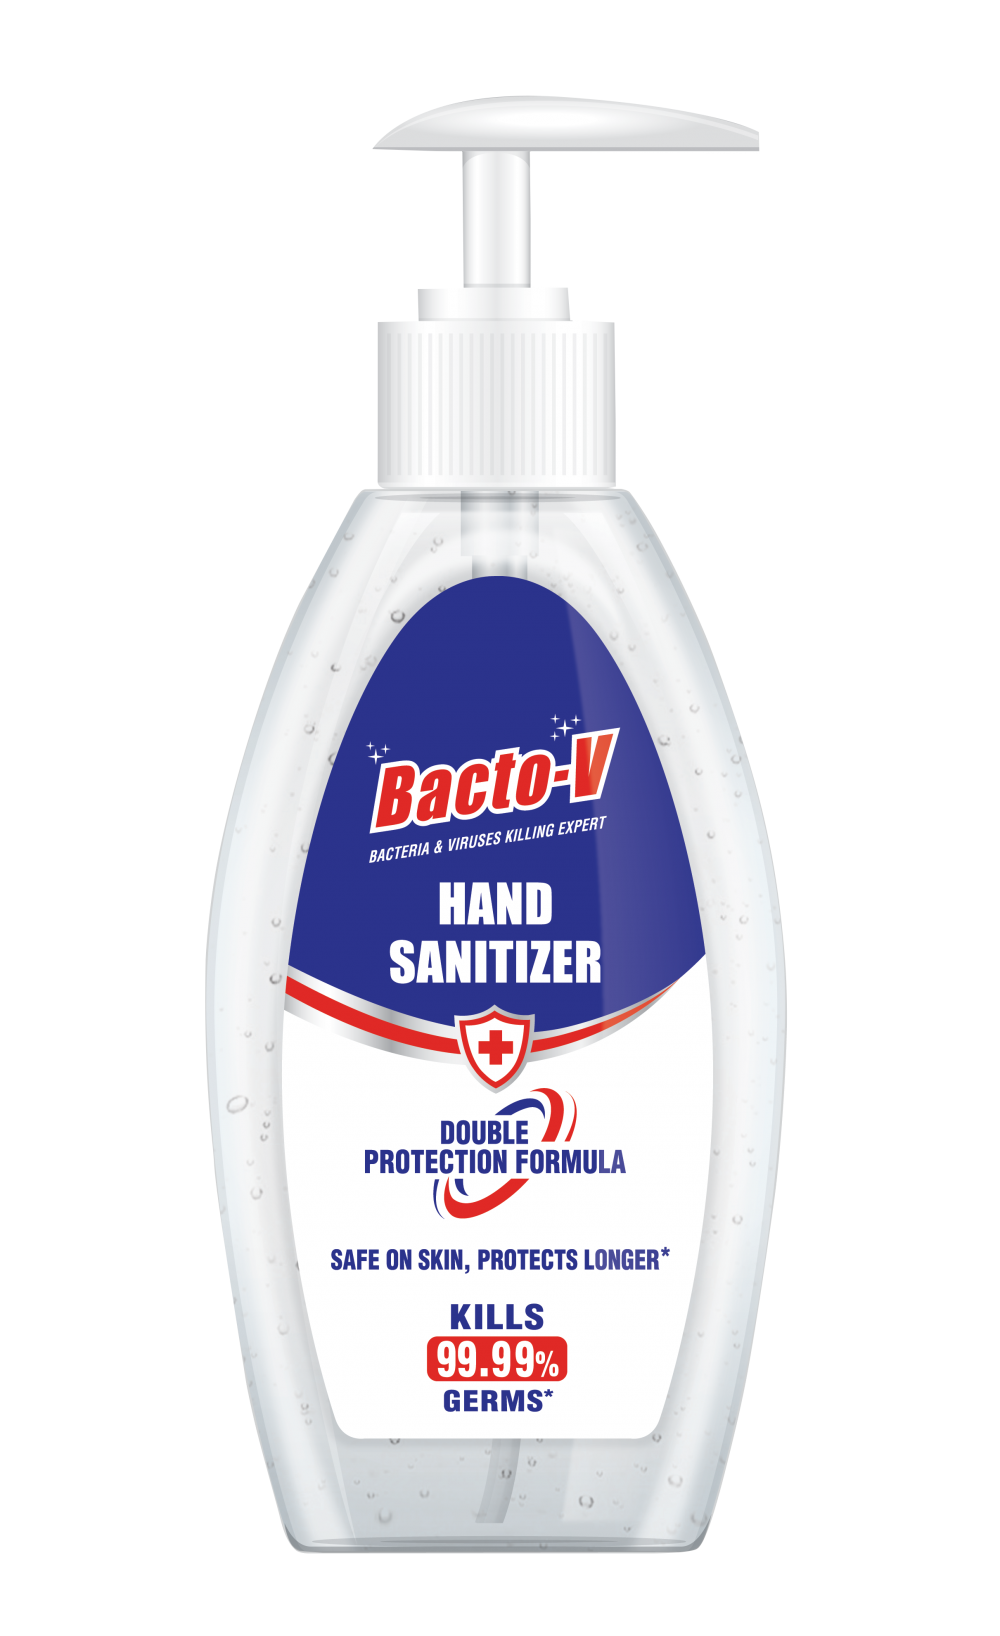 Bacto-V Hand Sanitizer